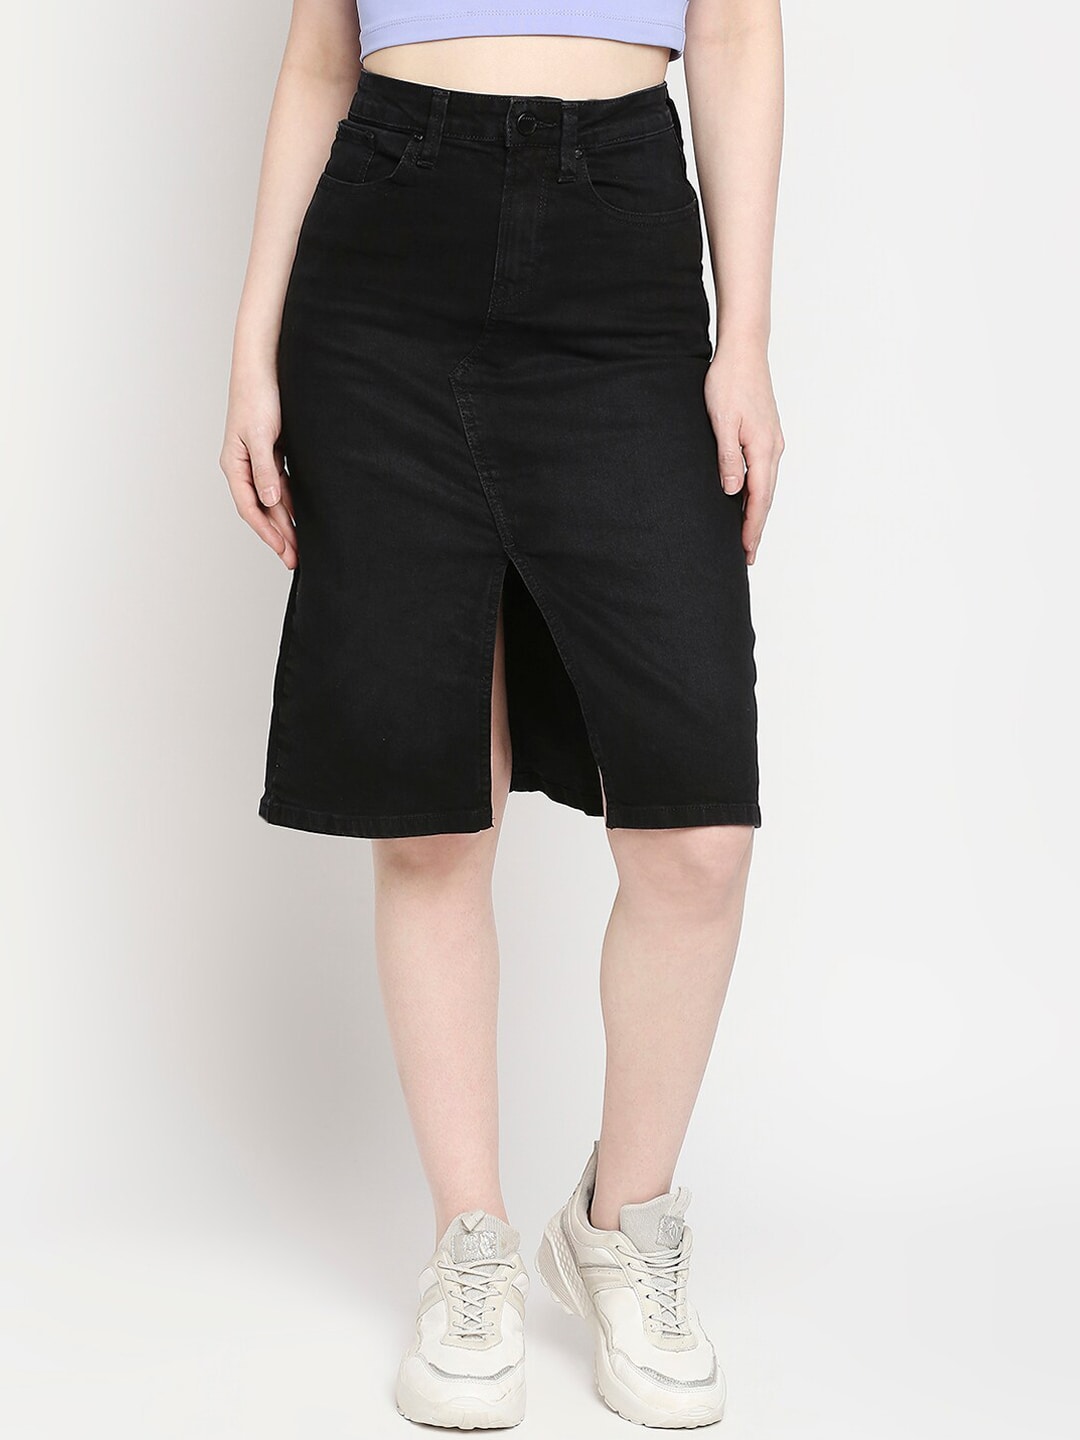 SPYKAR Pencil Knee-Length Denim Skirt Price in India